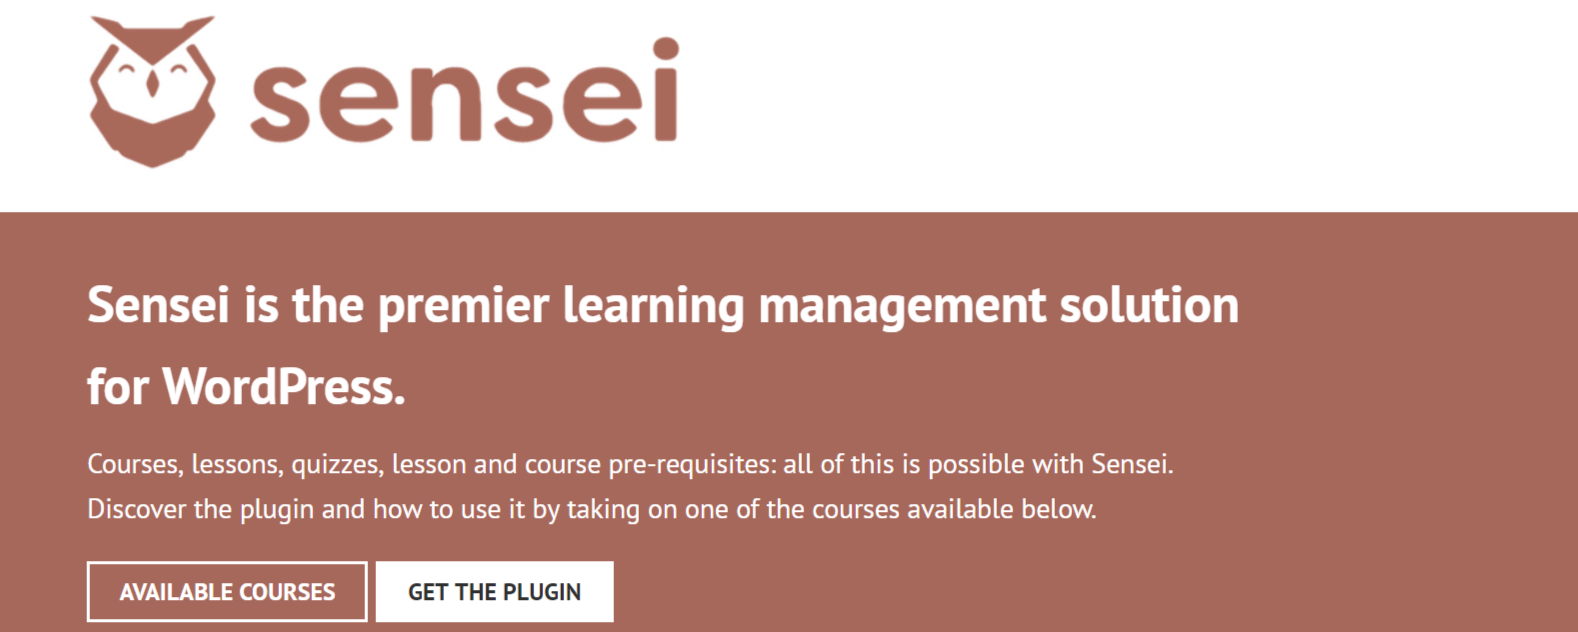 Discover the Sensei Plugin- Build An Online Couse Using WordPress